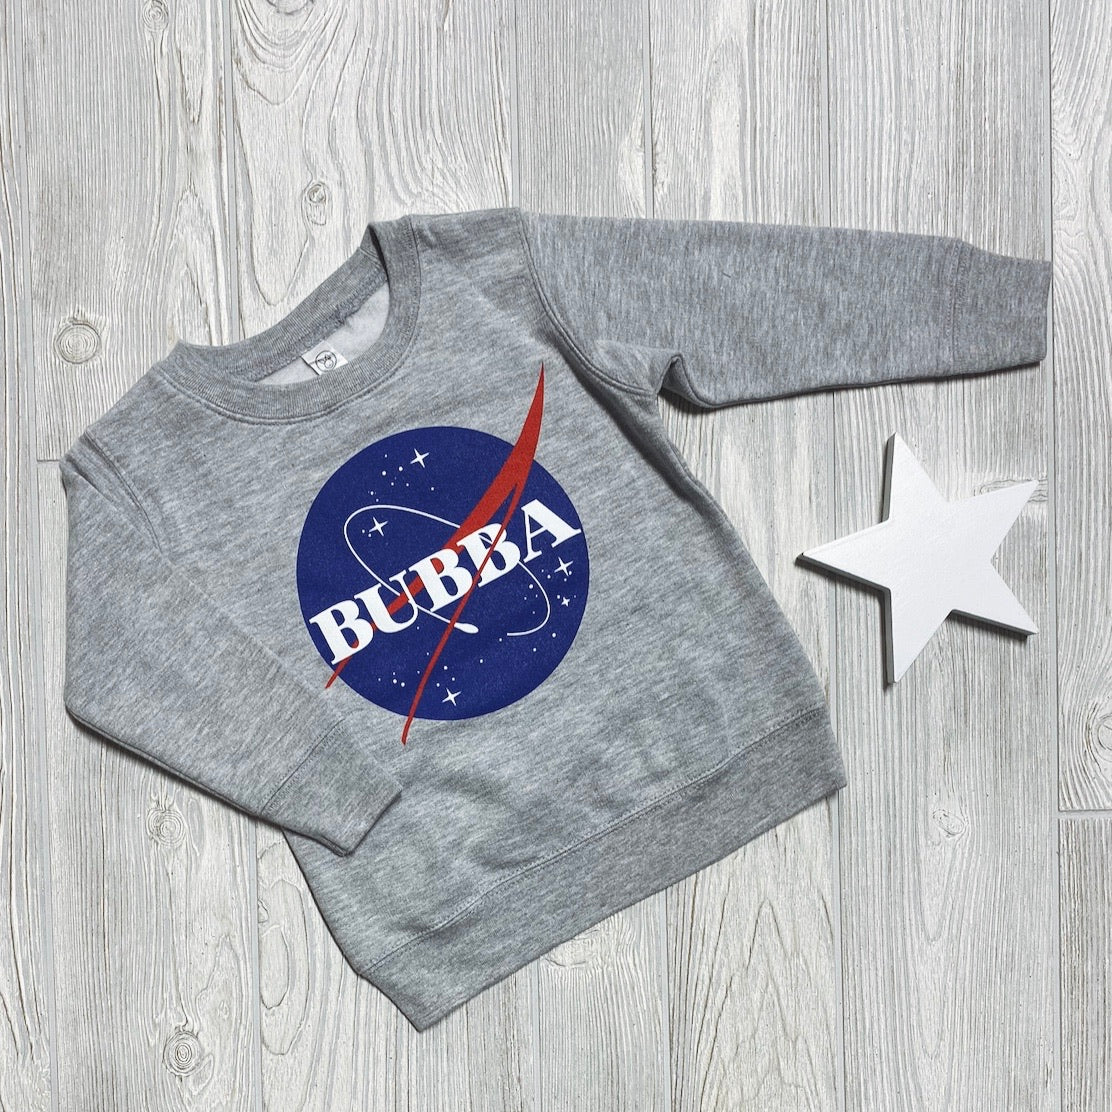 Bubba Space • Pullover